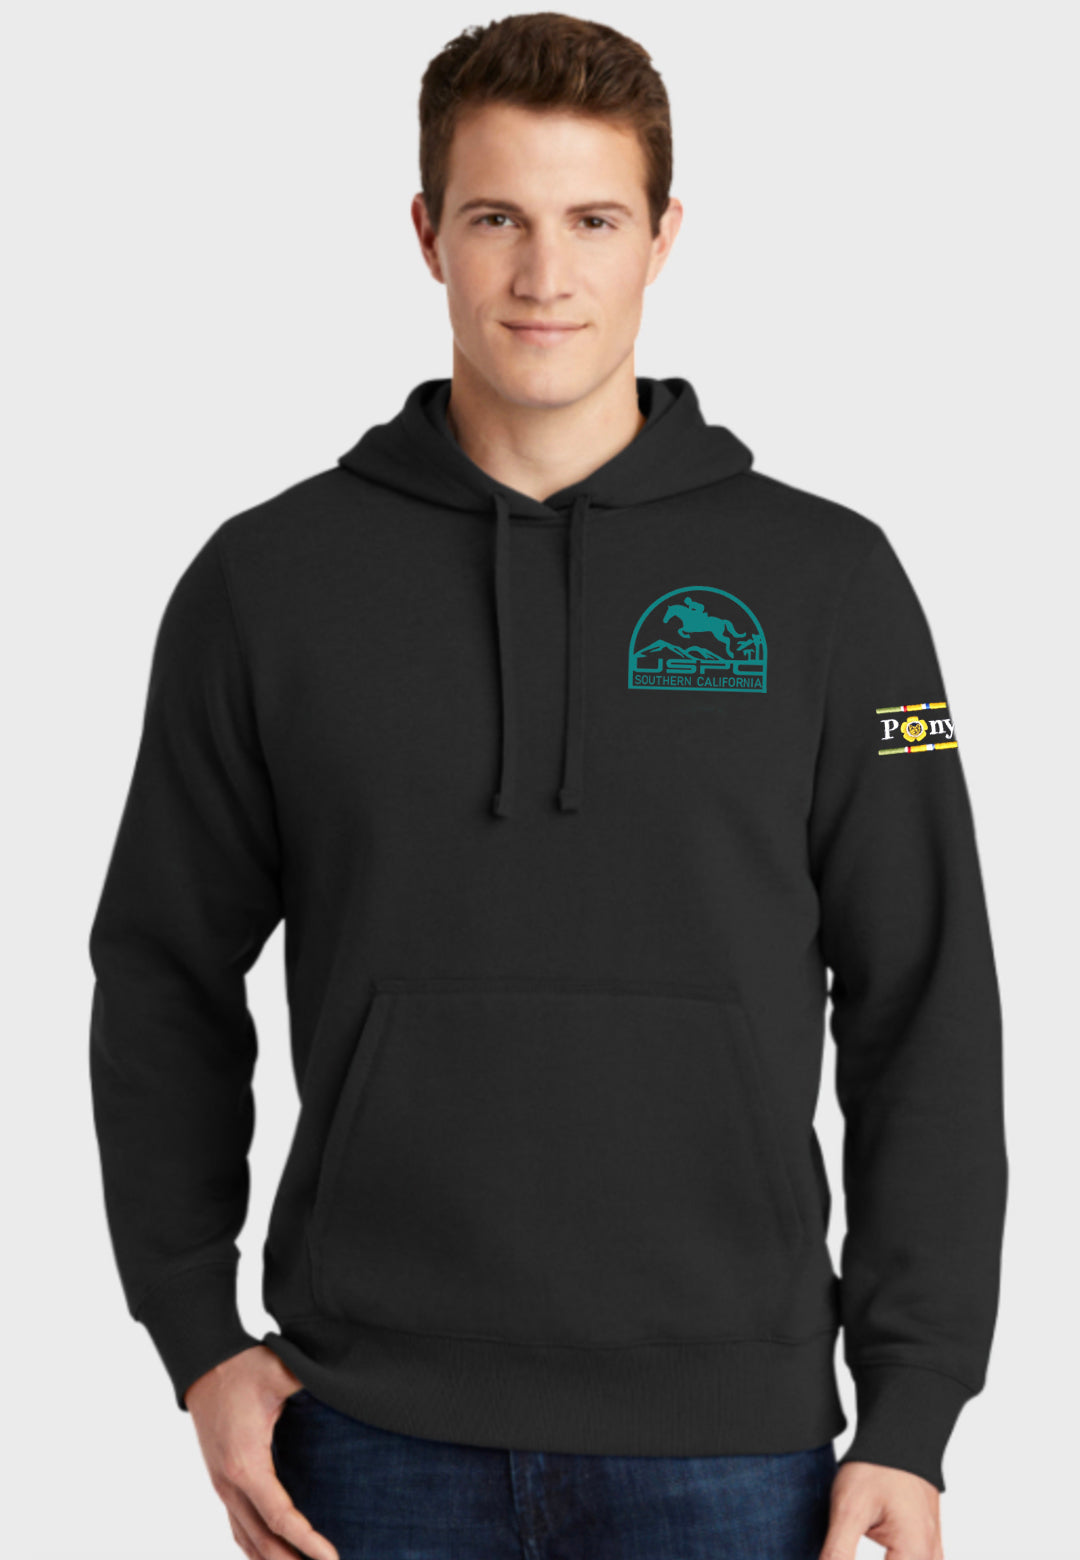 Southern CA USPC  Sport-Tek® Hooded Sweatshirt - Adult + Youth sizes